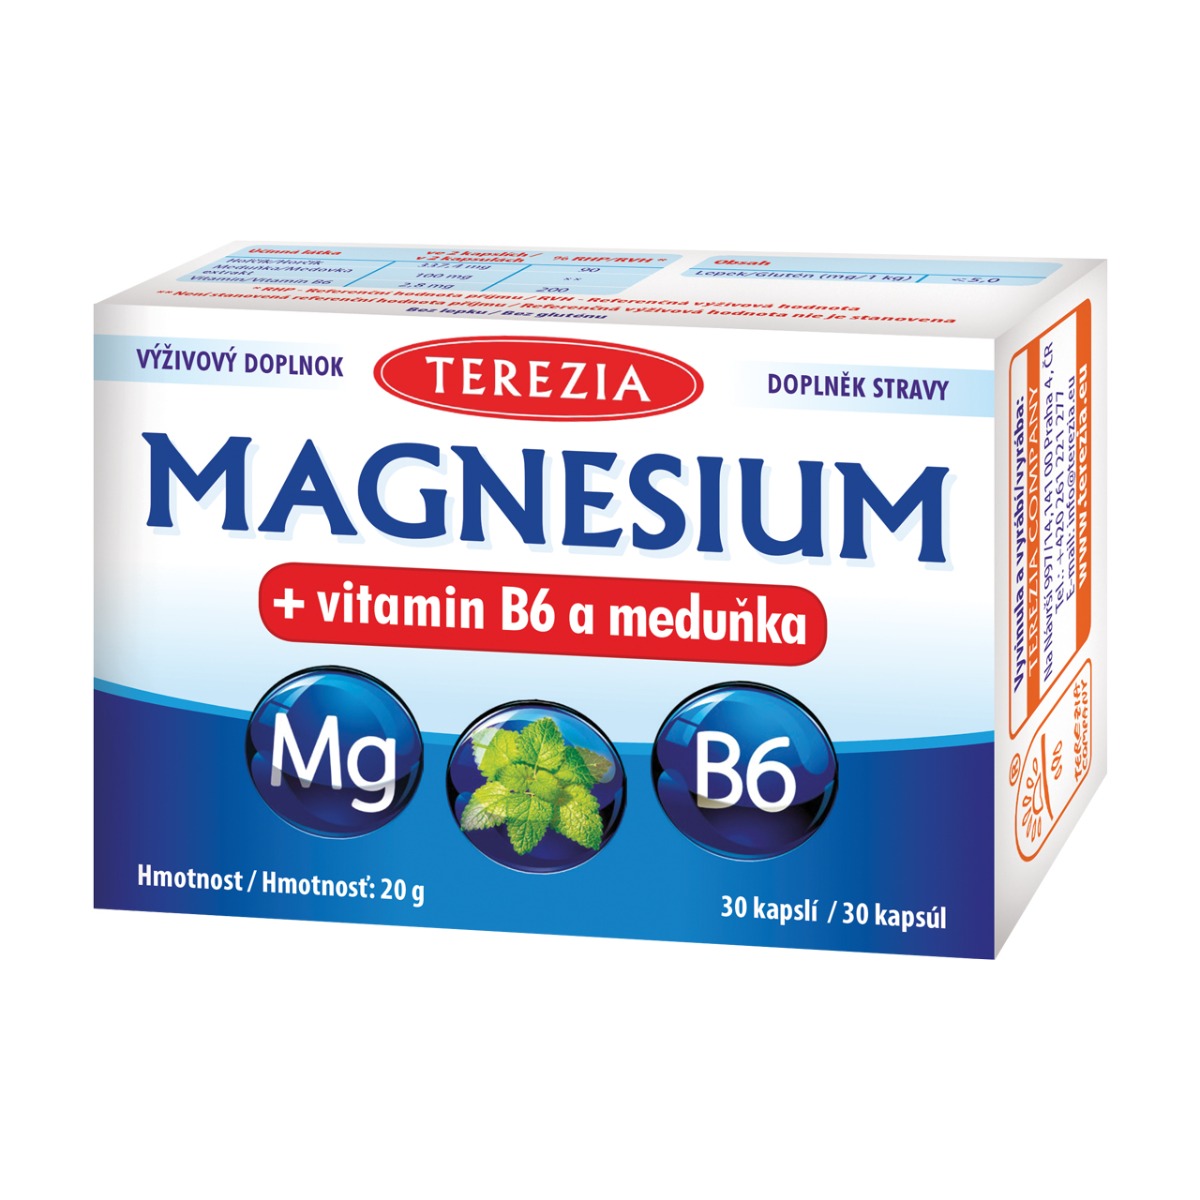 TEREZIA MAGNESIUM  vitamin B6 a meduňka